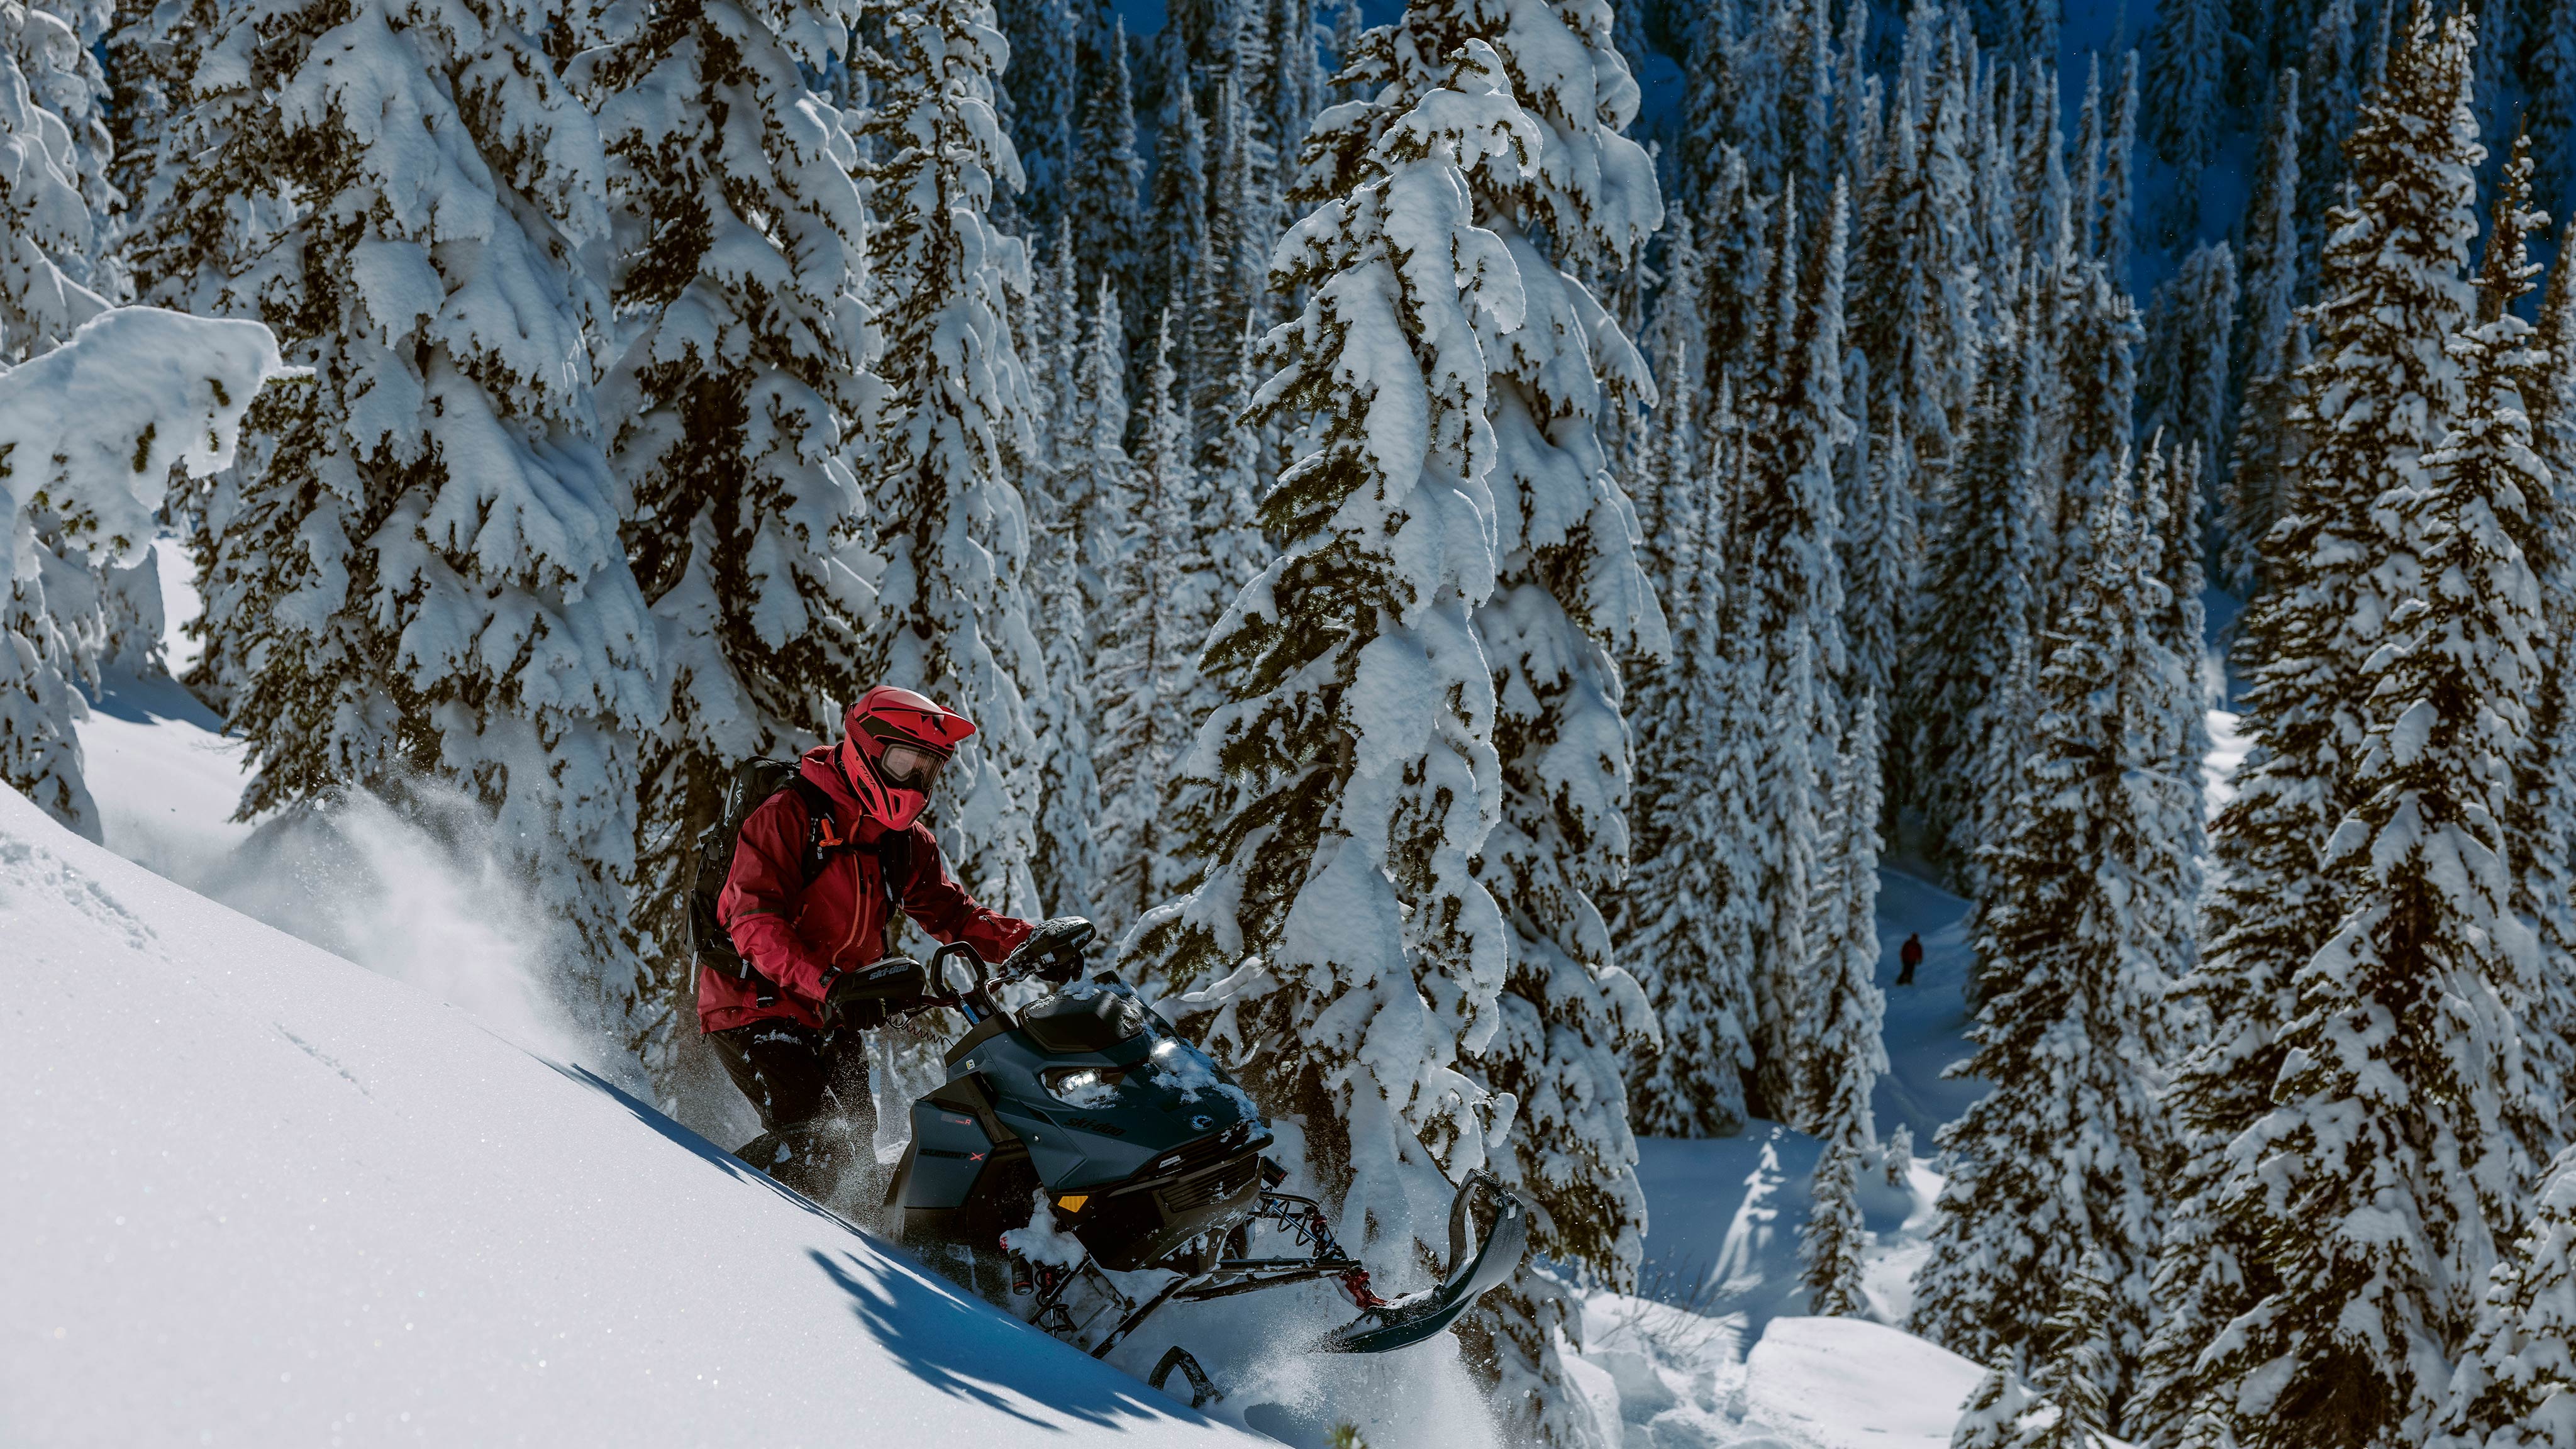 2025 Ski-Doo Summit snöskoter i en snöig skog